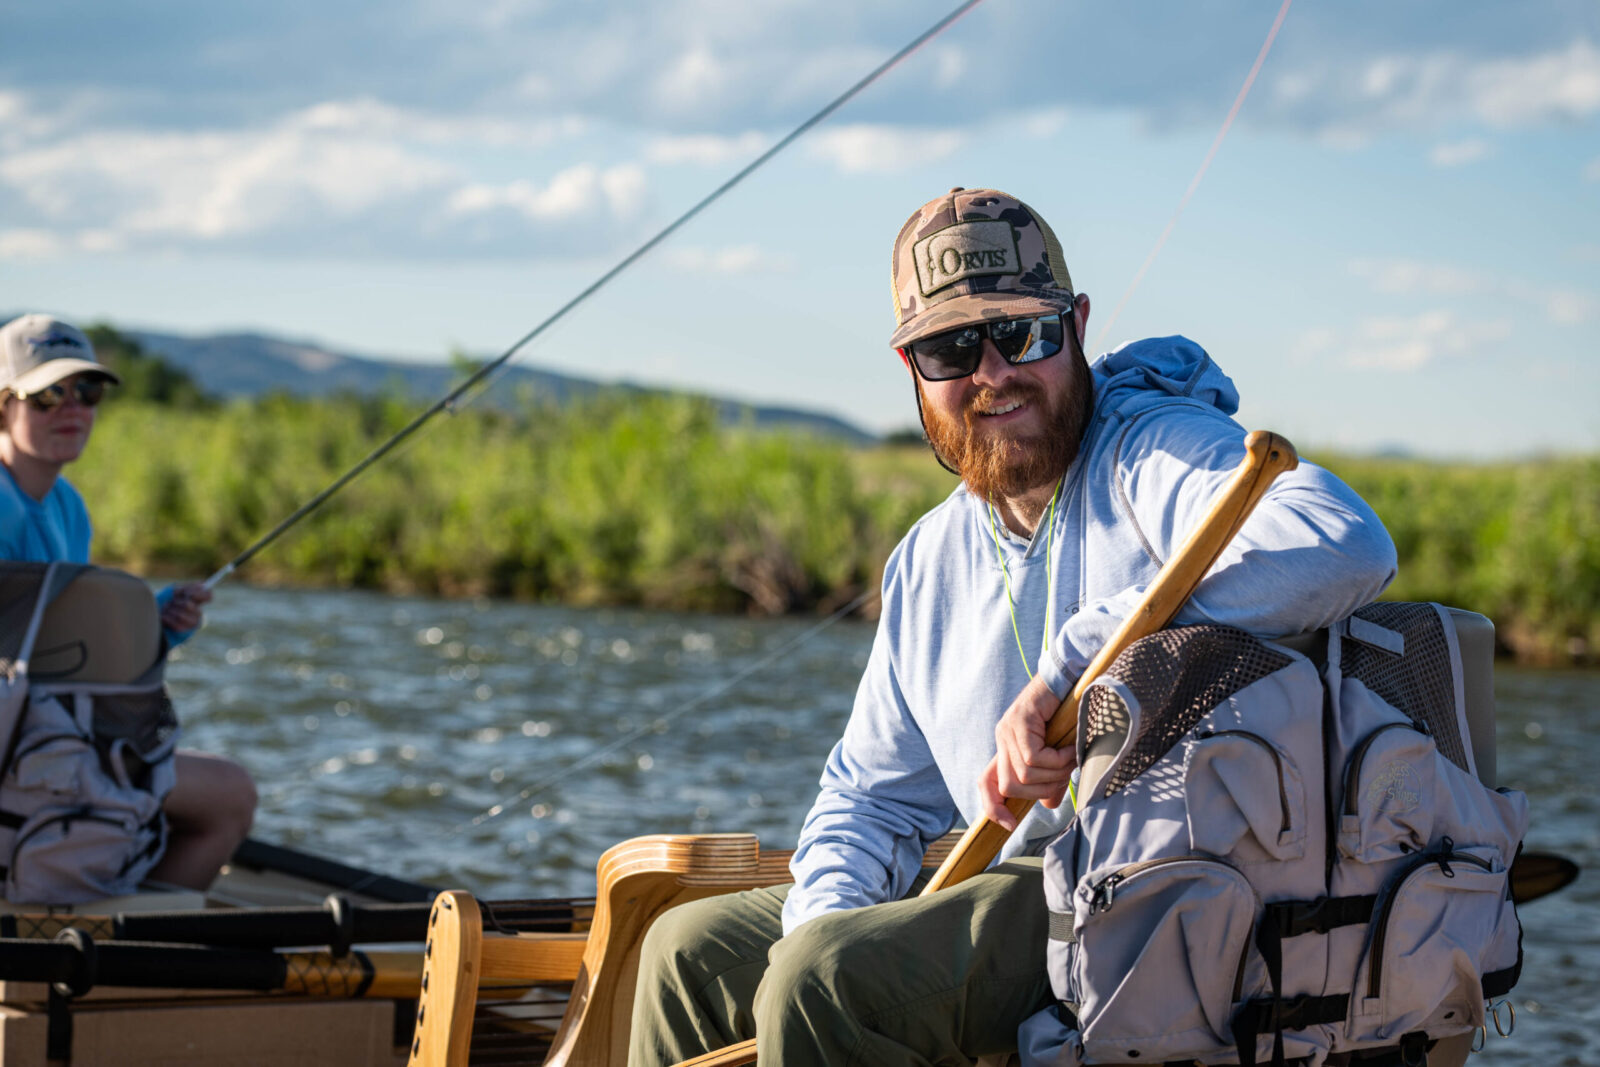 Bozeman Montana Fly Fishing, Rafting, Skiing - AllTrips